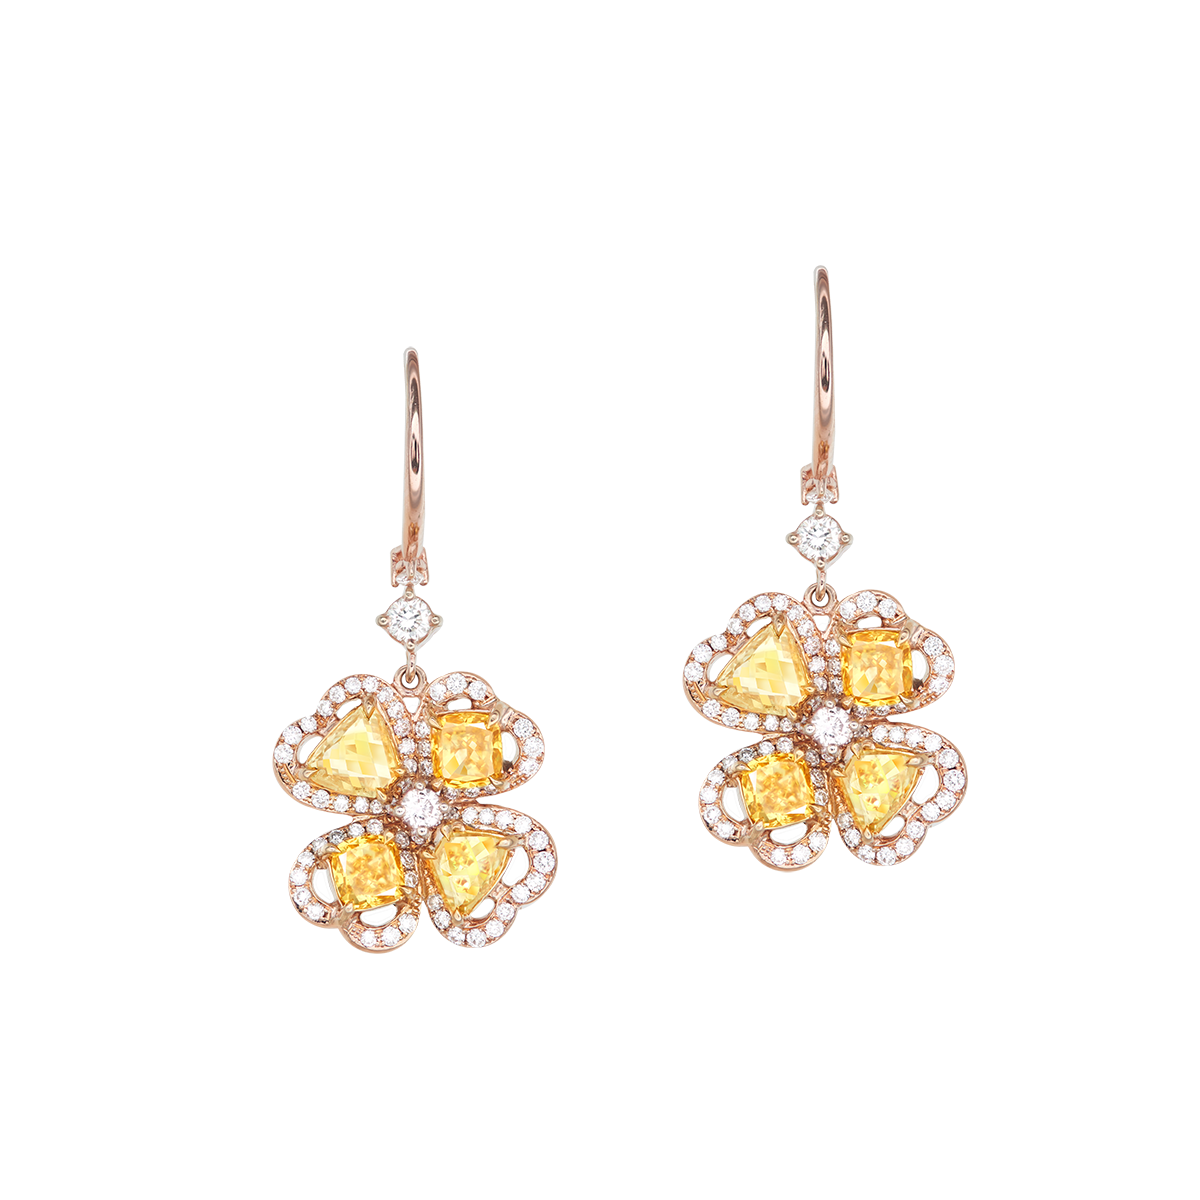 ALROSA黃鑽耳環 1.96克拉
Fancy Vivid Yellow Colored
Diamond and Diamond Earrings